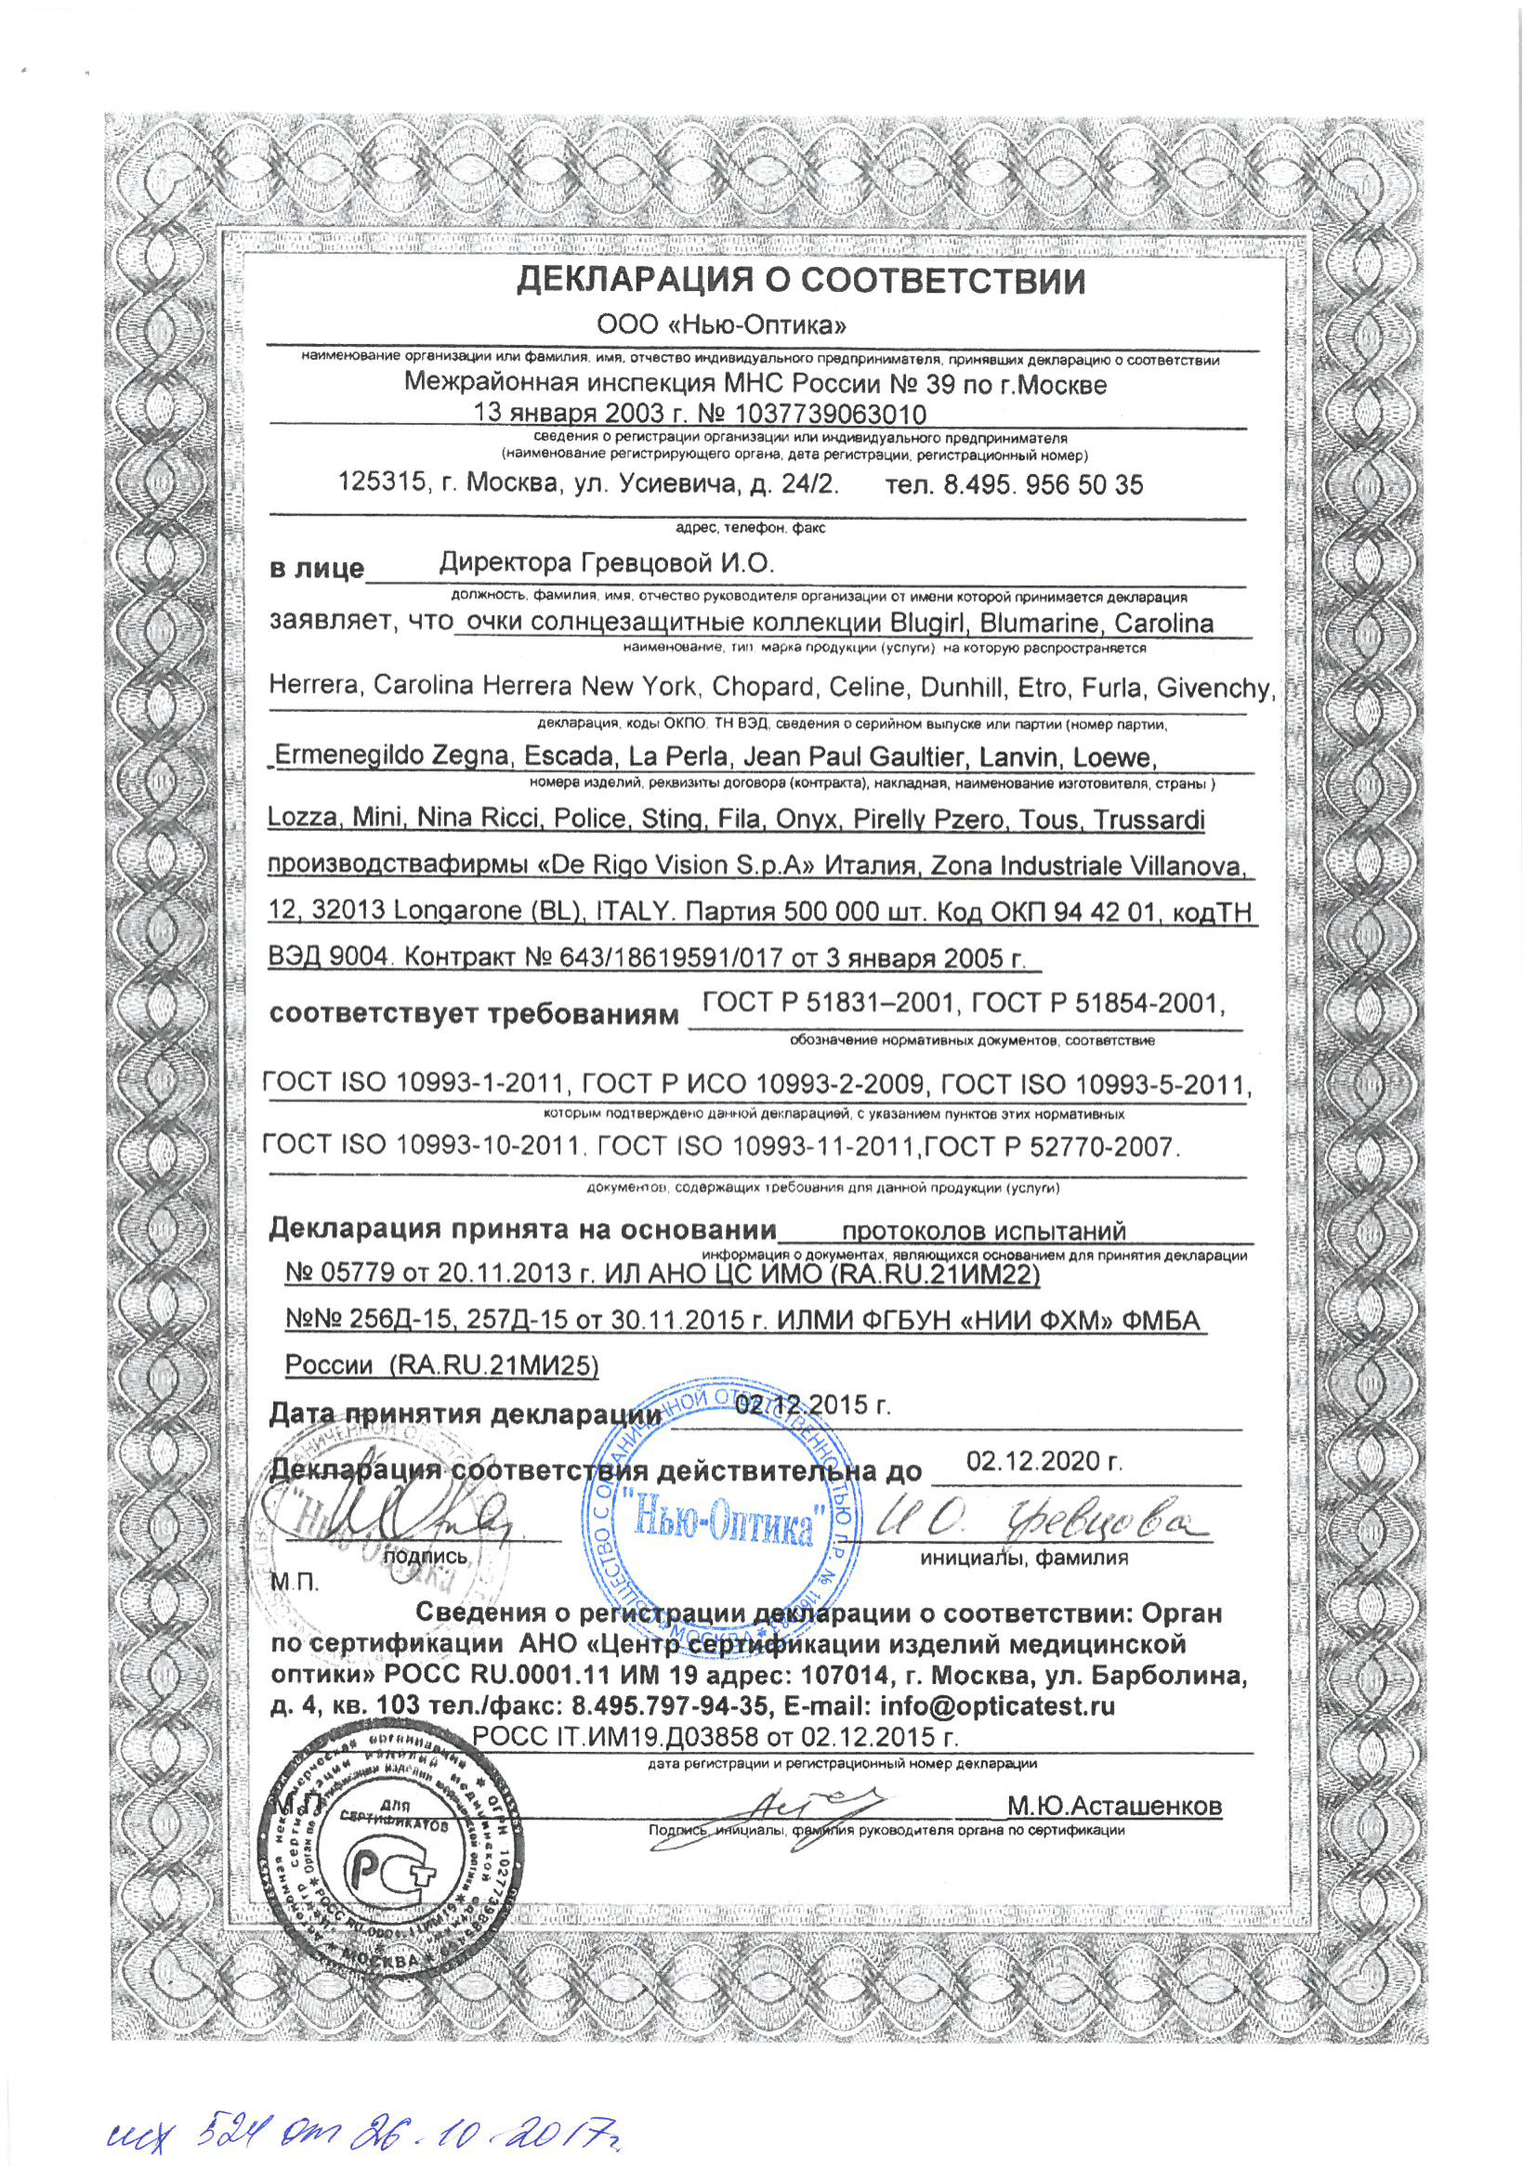 /images/certificates/sertificate6-1.png